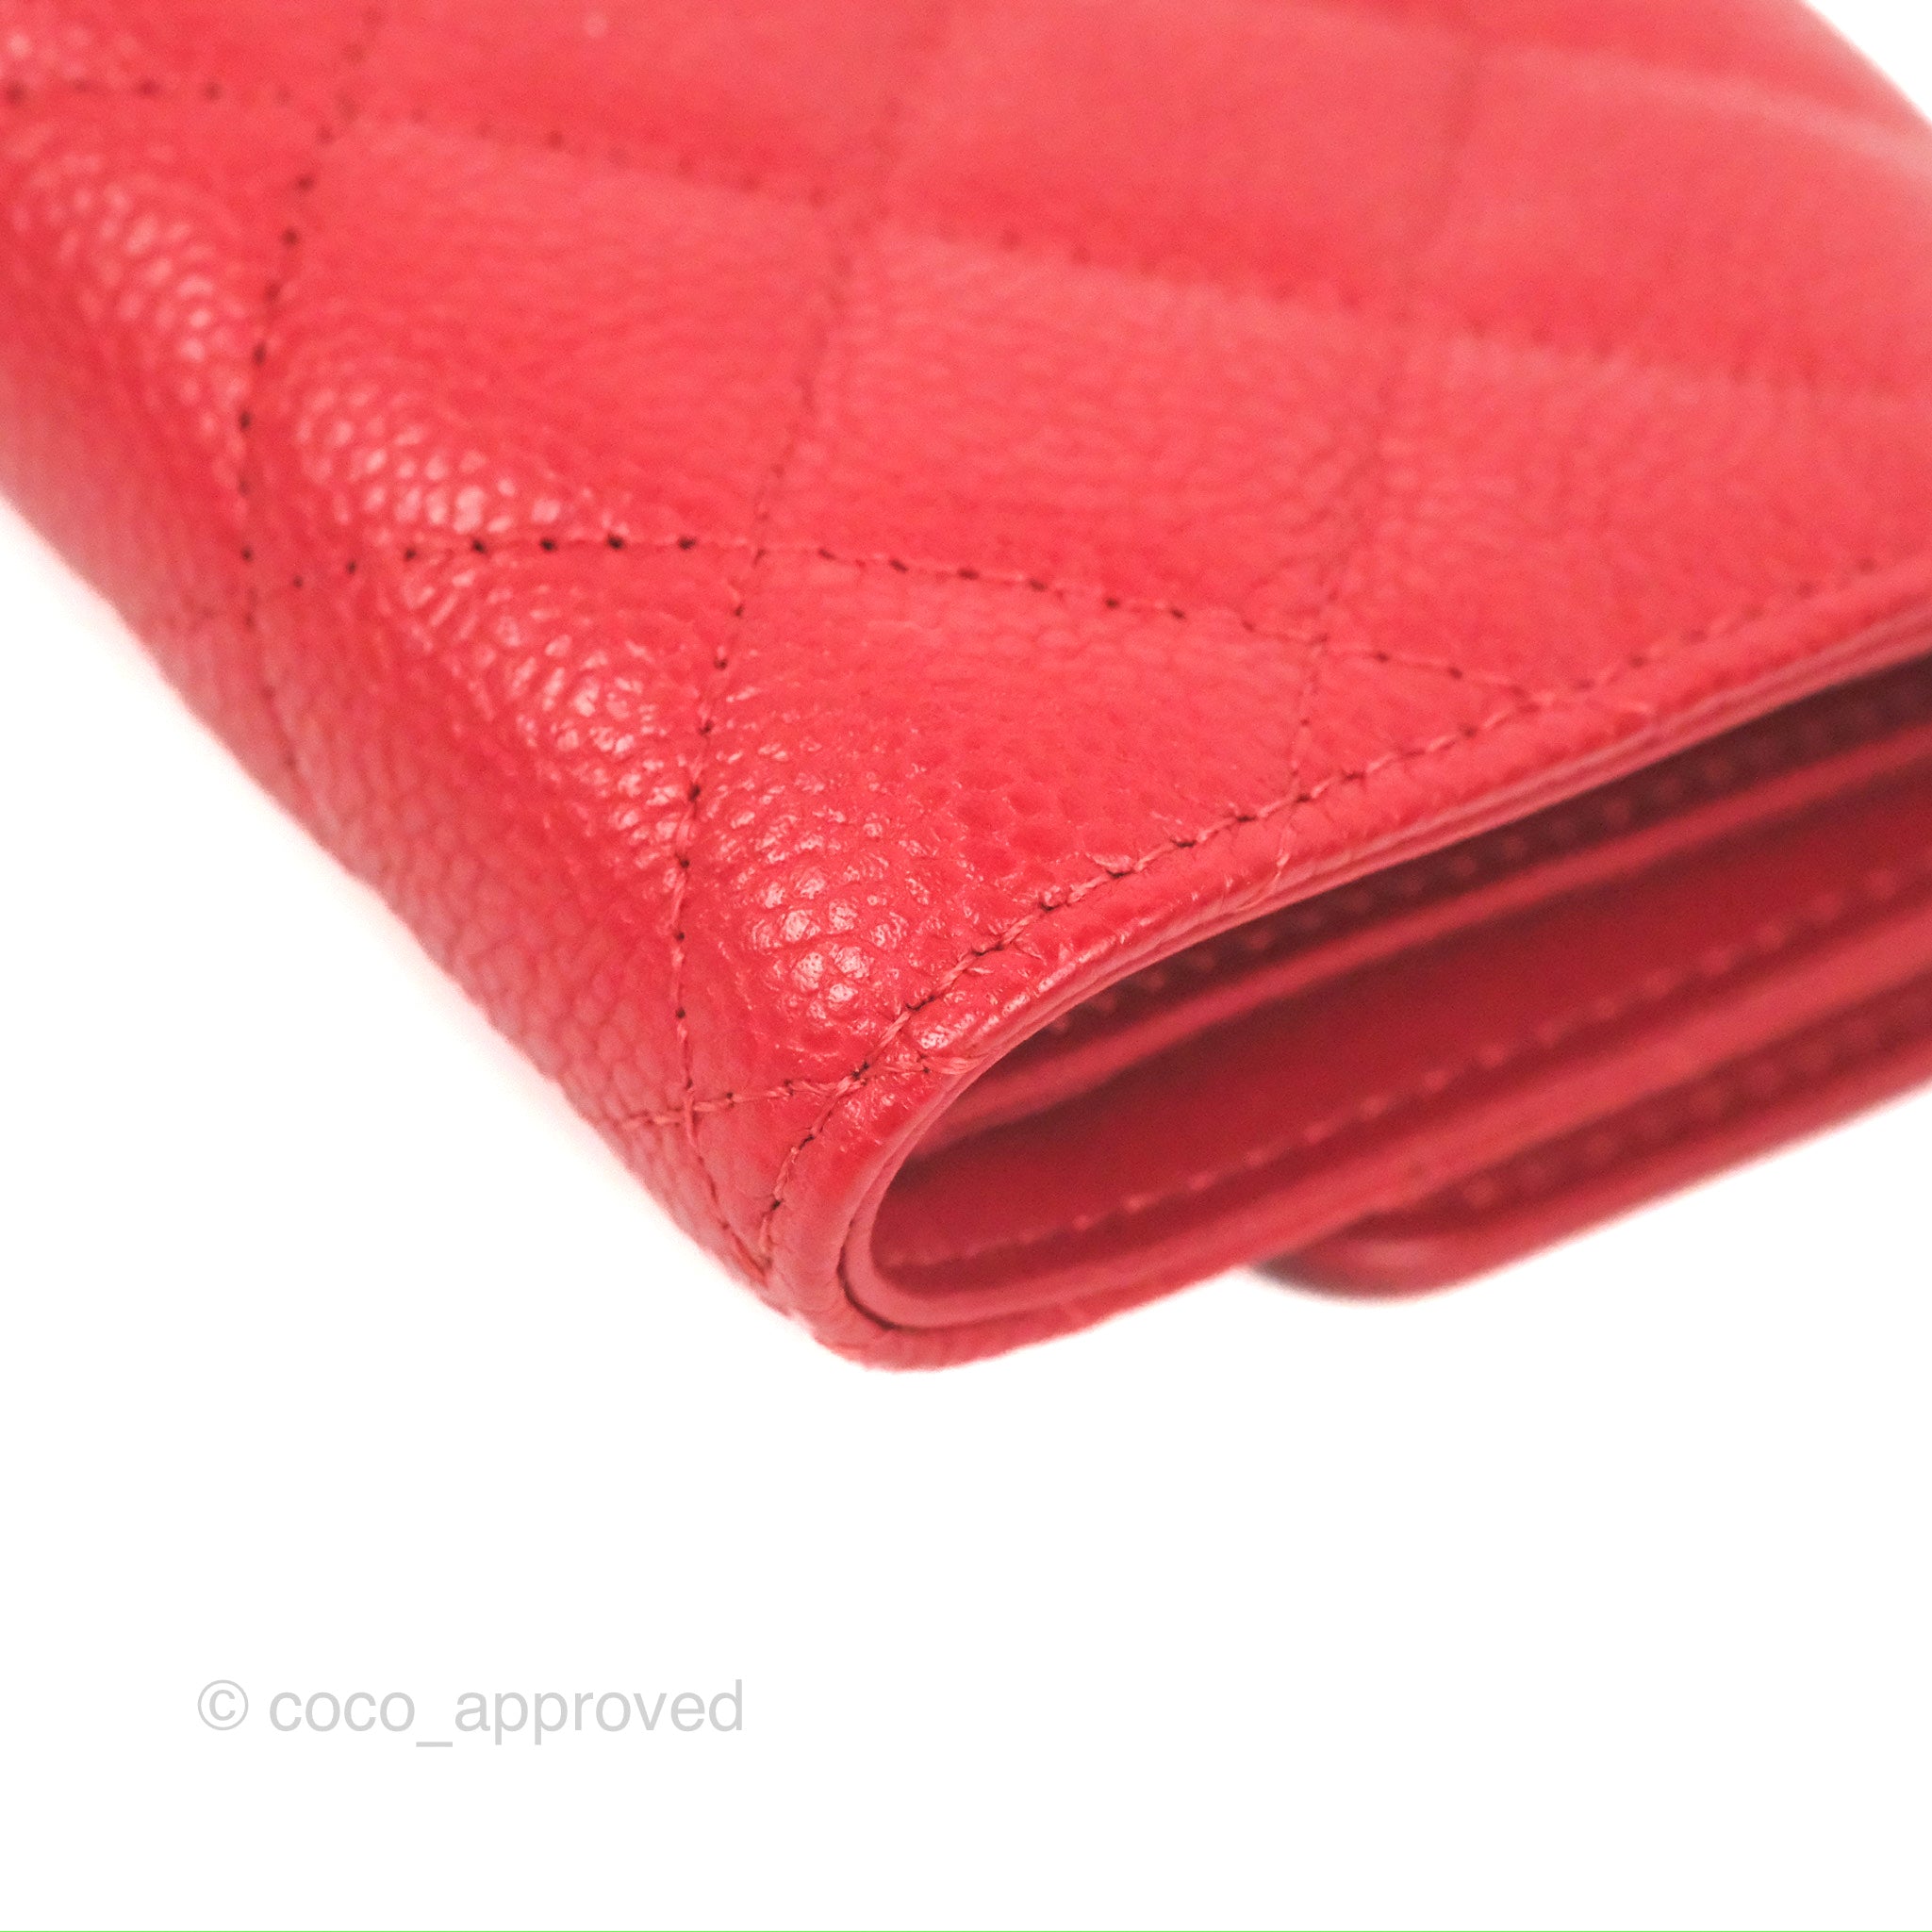 Chanel Classic Long Flap Wallet 